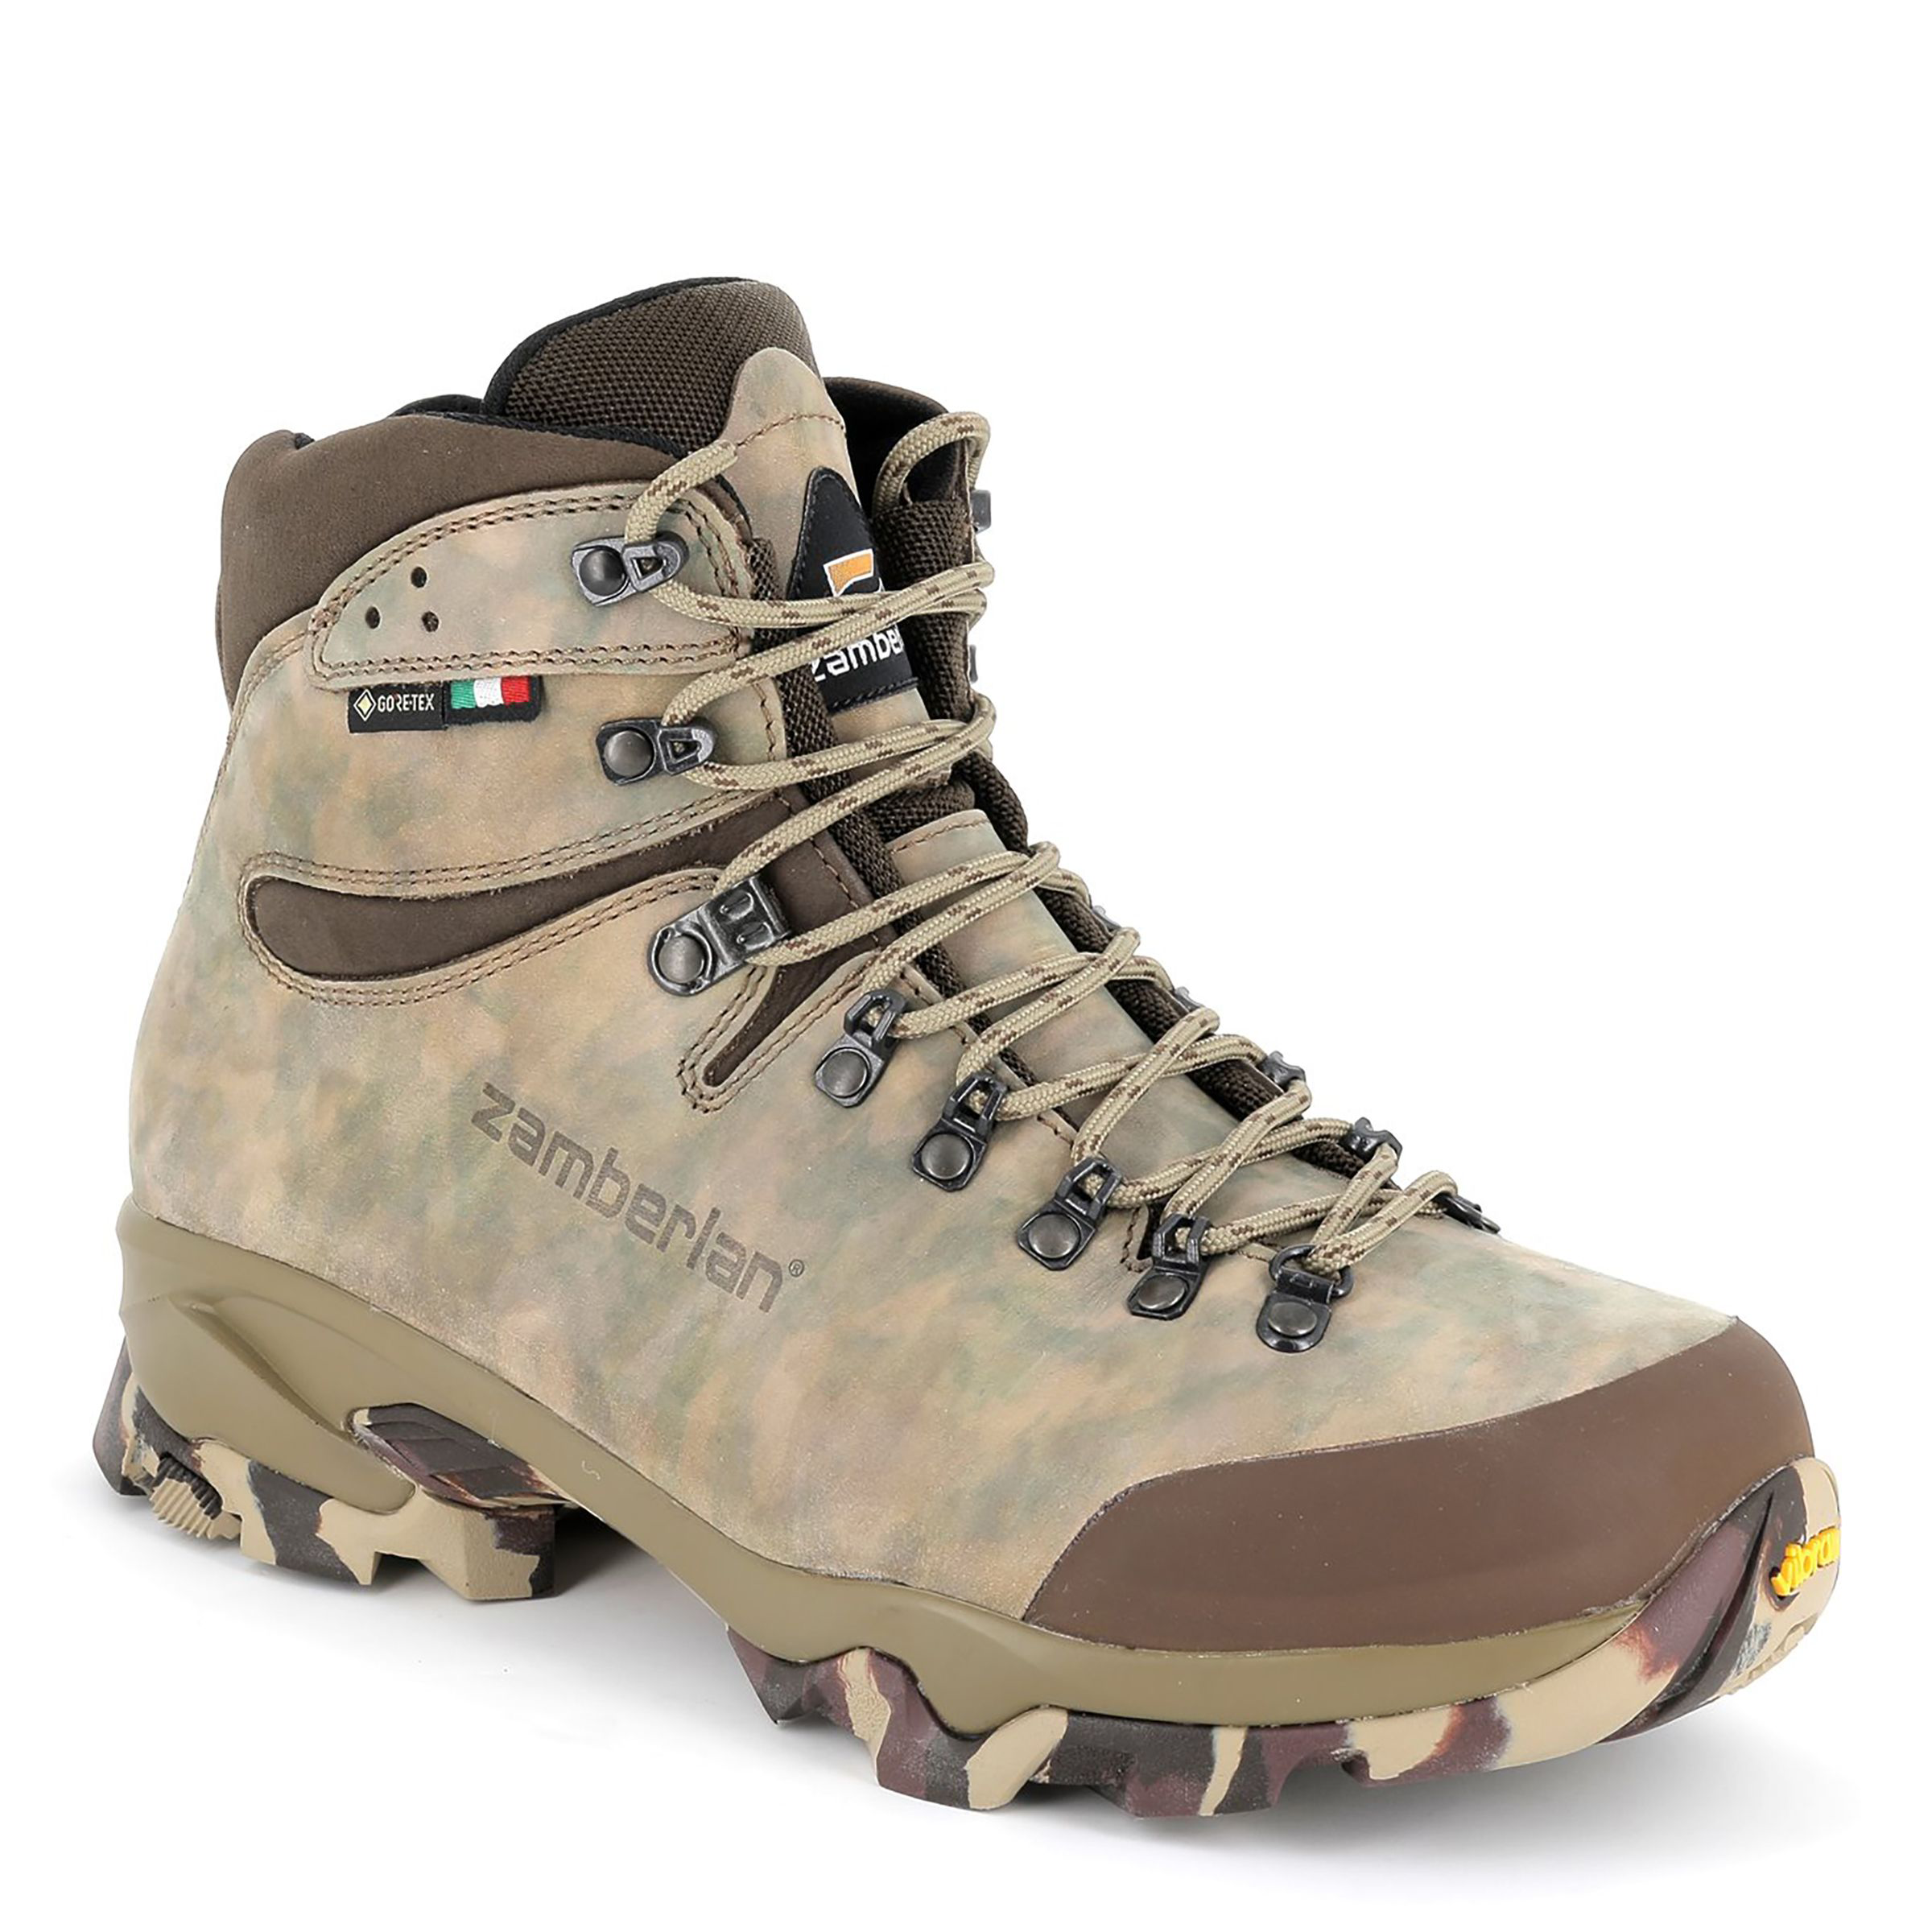 Zamberlan 1213 Leopard GTX RR GORE-TEX Hunting Boots for Men - Beige - 11W